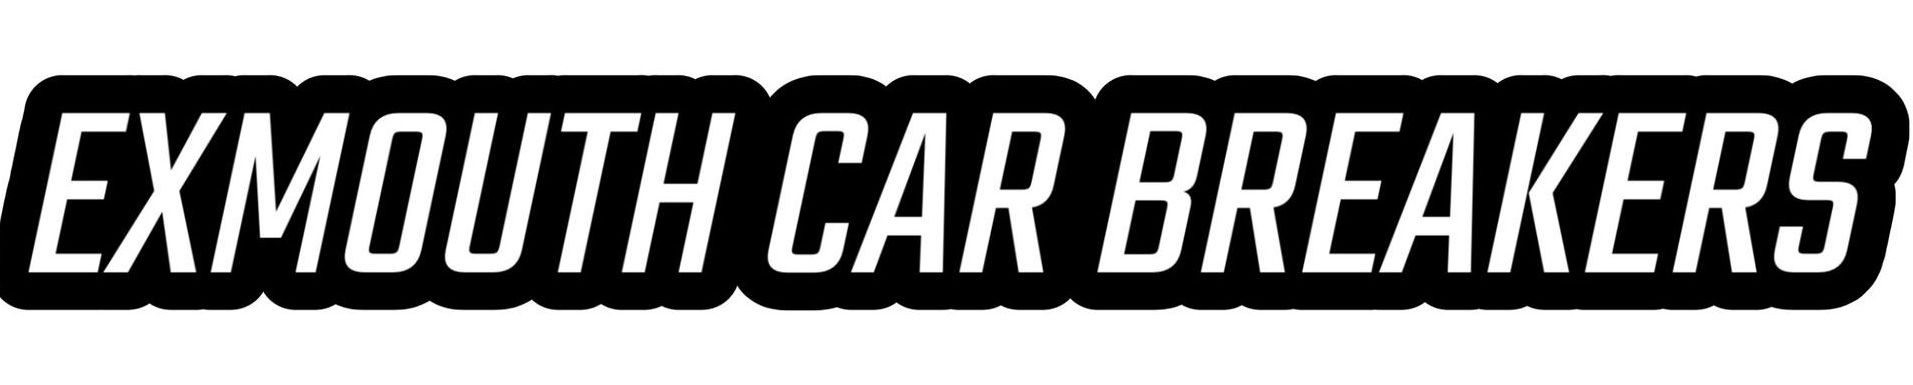 Exmouth Car Breakers Logo